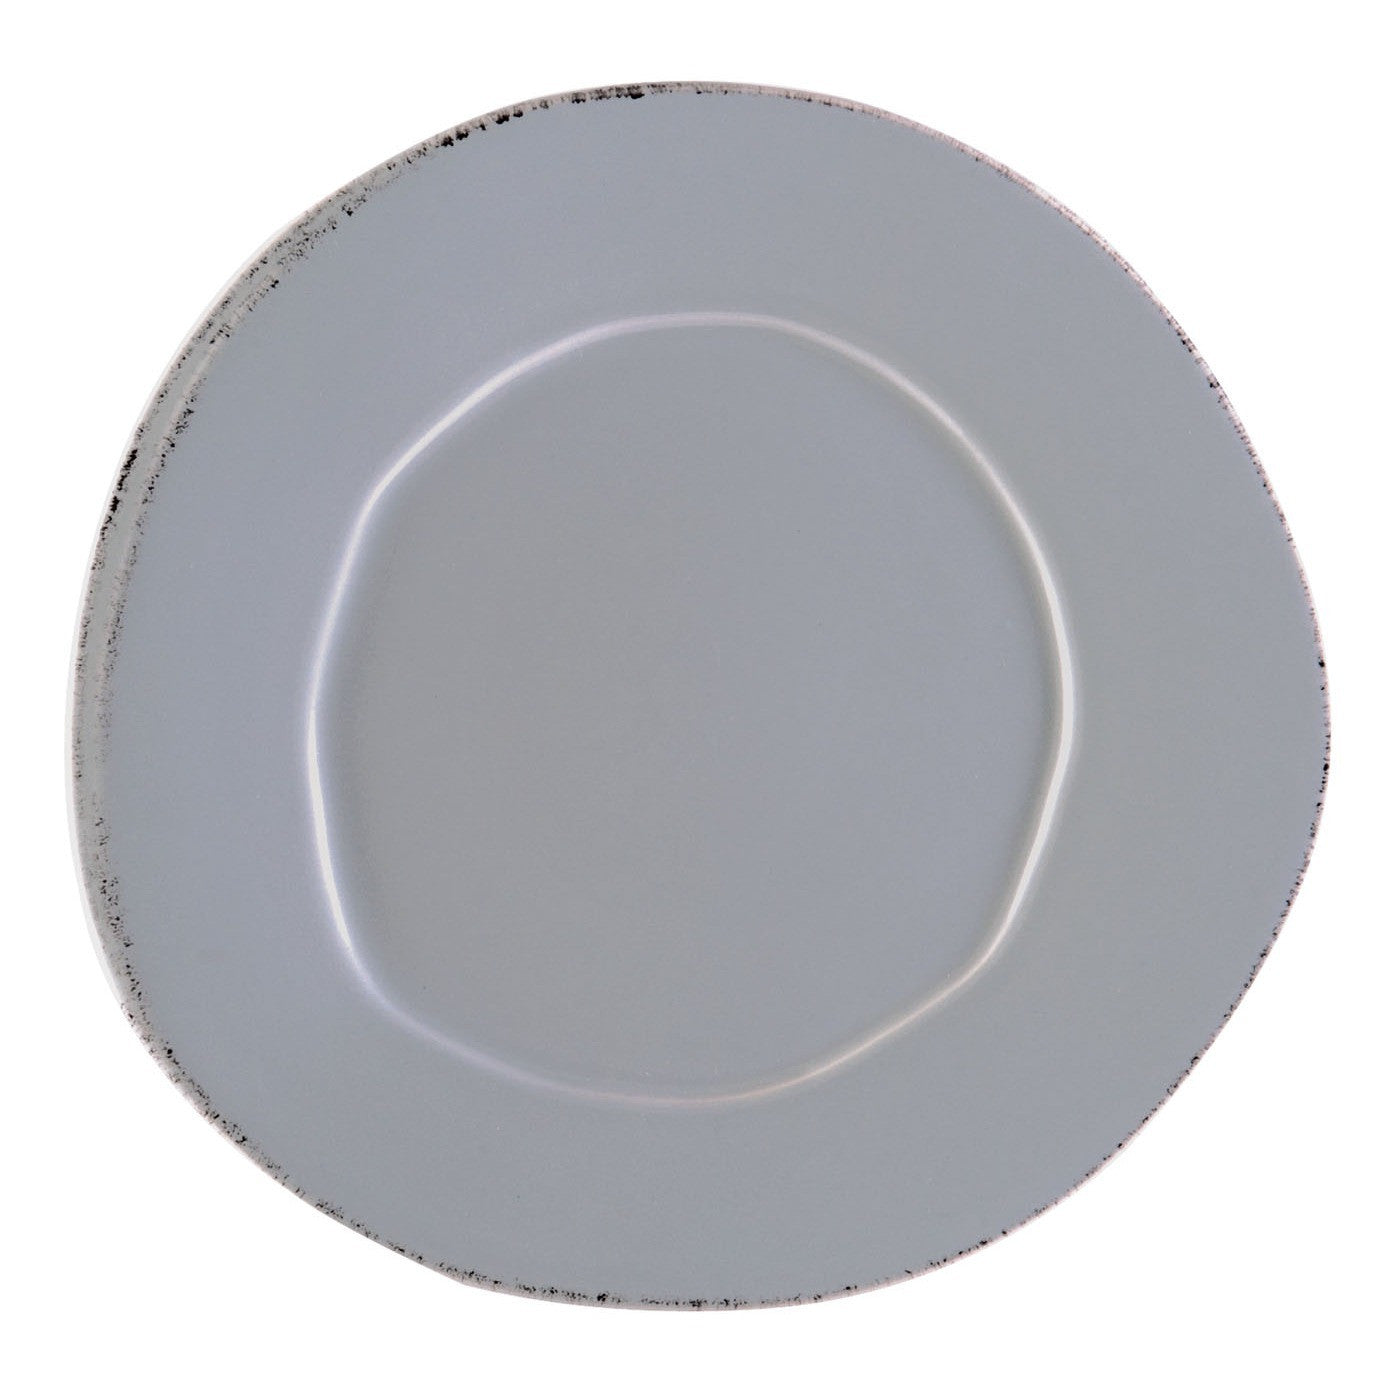 VIETRI: Lastra Gray Dinner Plate - Artistica.com